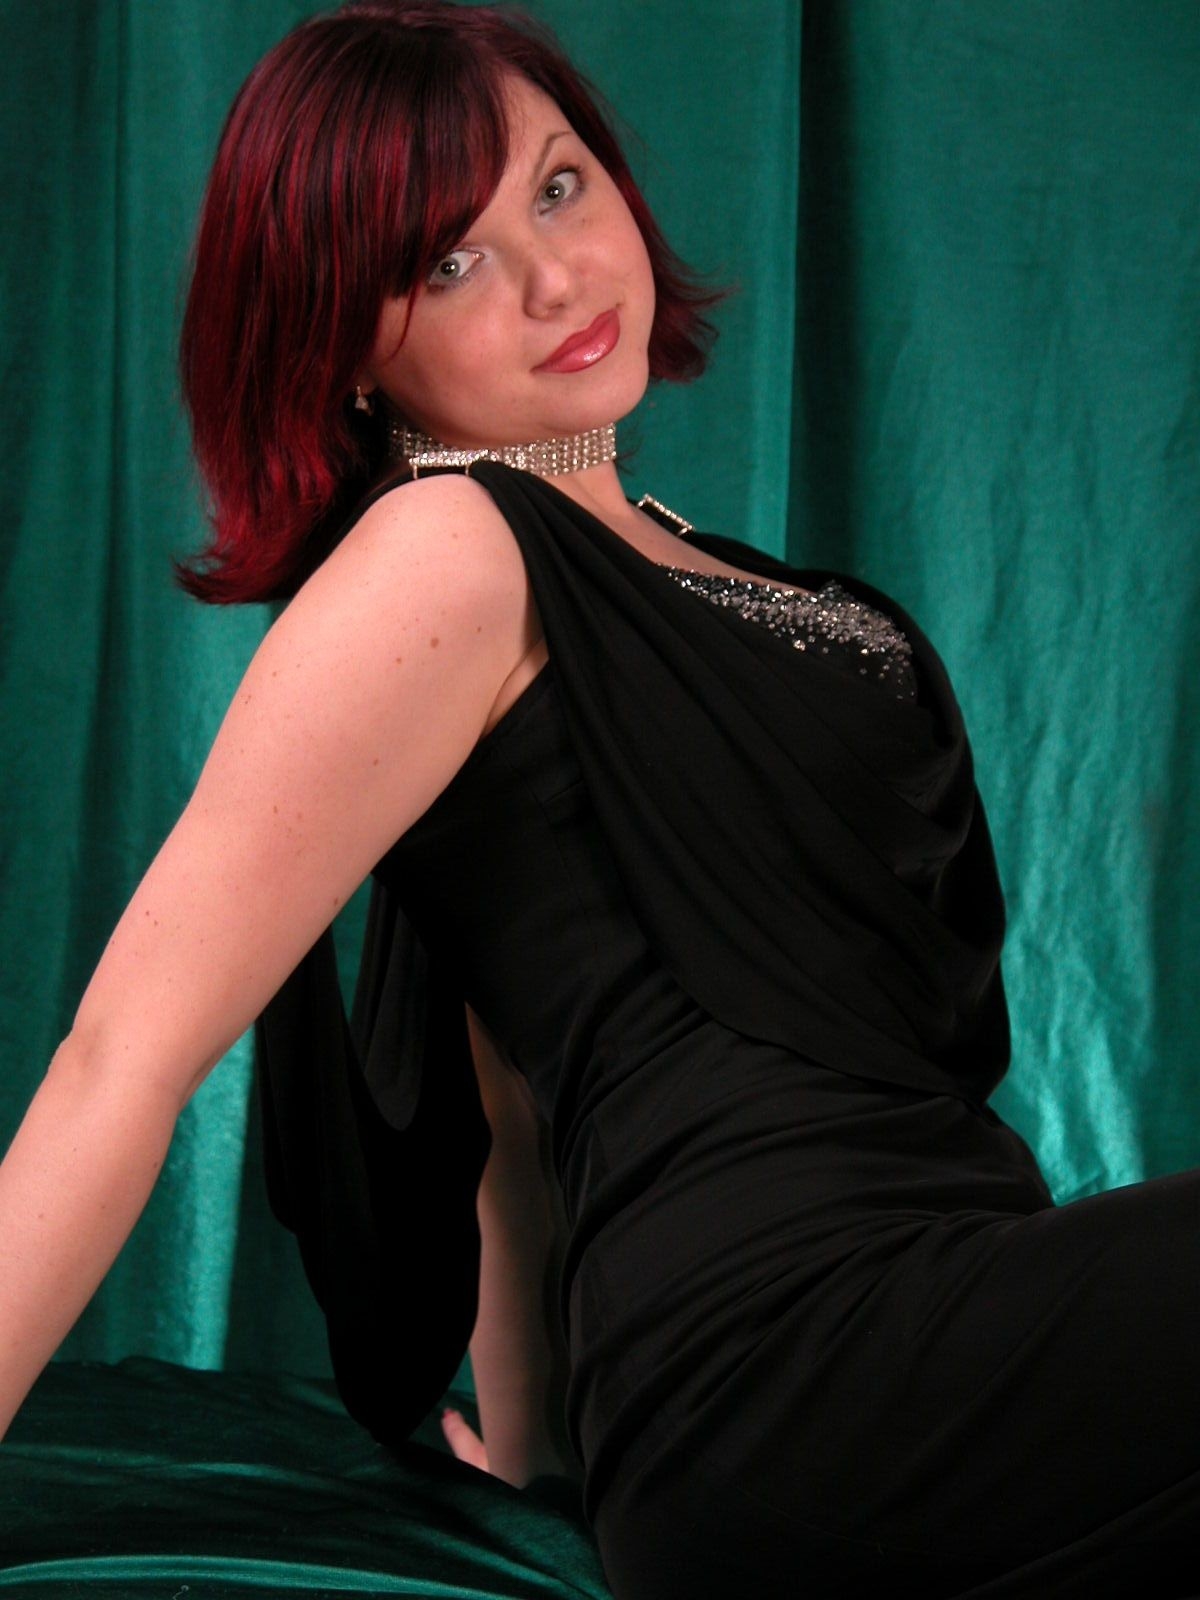 Busty redhead babe in black dress